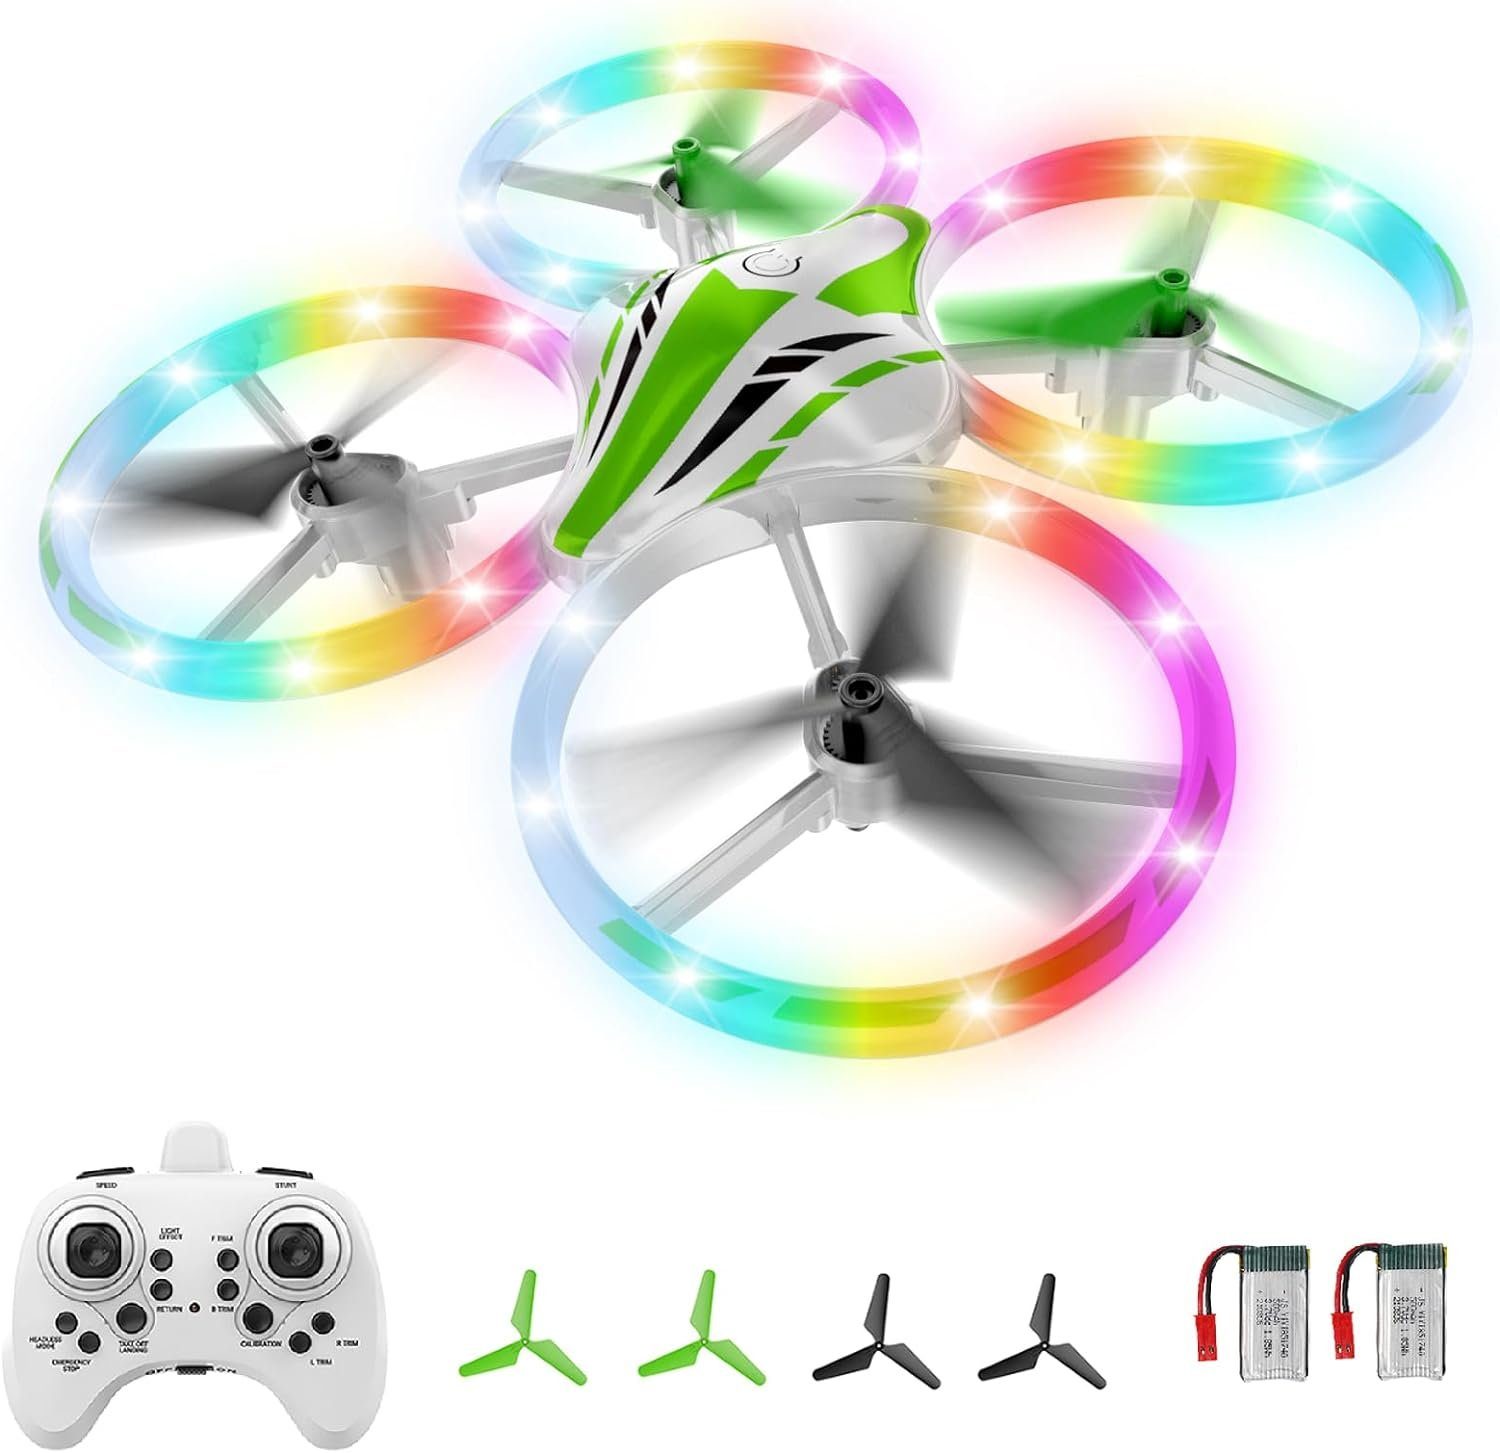 OBEST Mini Drohne für Kinder RC Quadrocopter mit coole LED Lichter